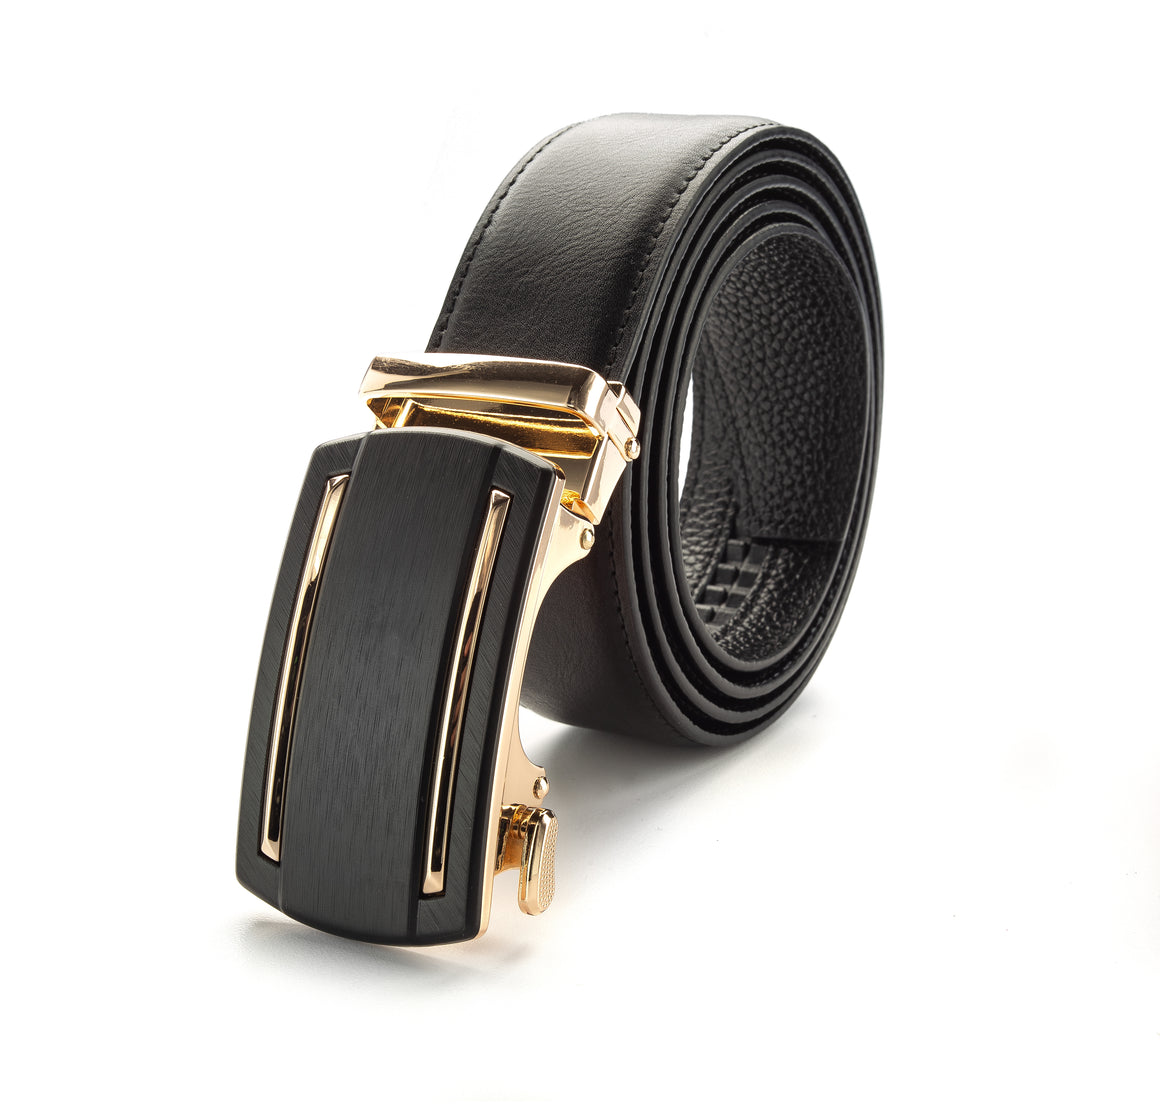 Royal: Exquisite men's leather track belts defining formal elegance and casual chic | BELT-57